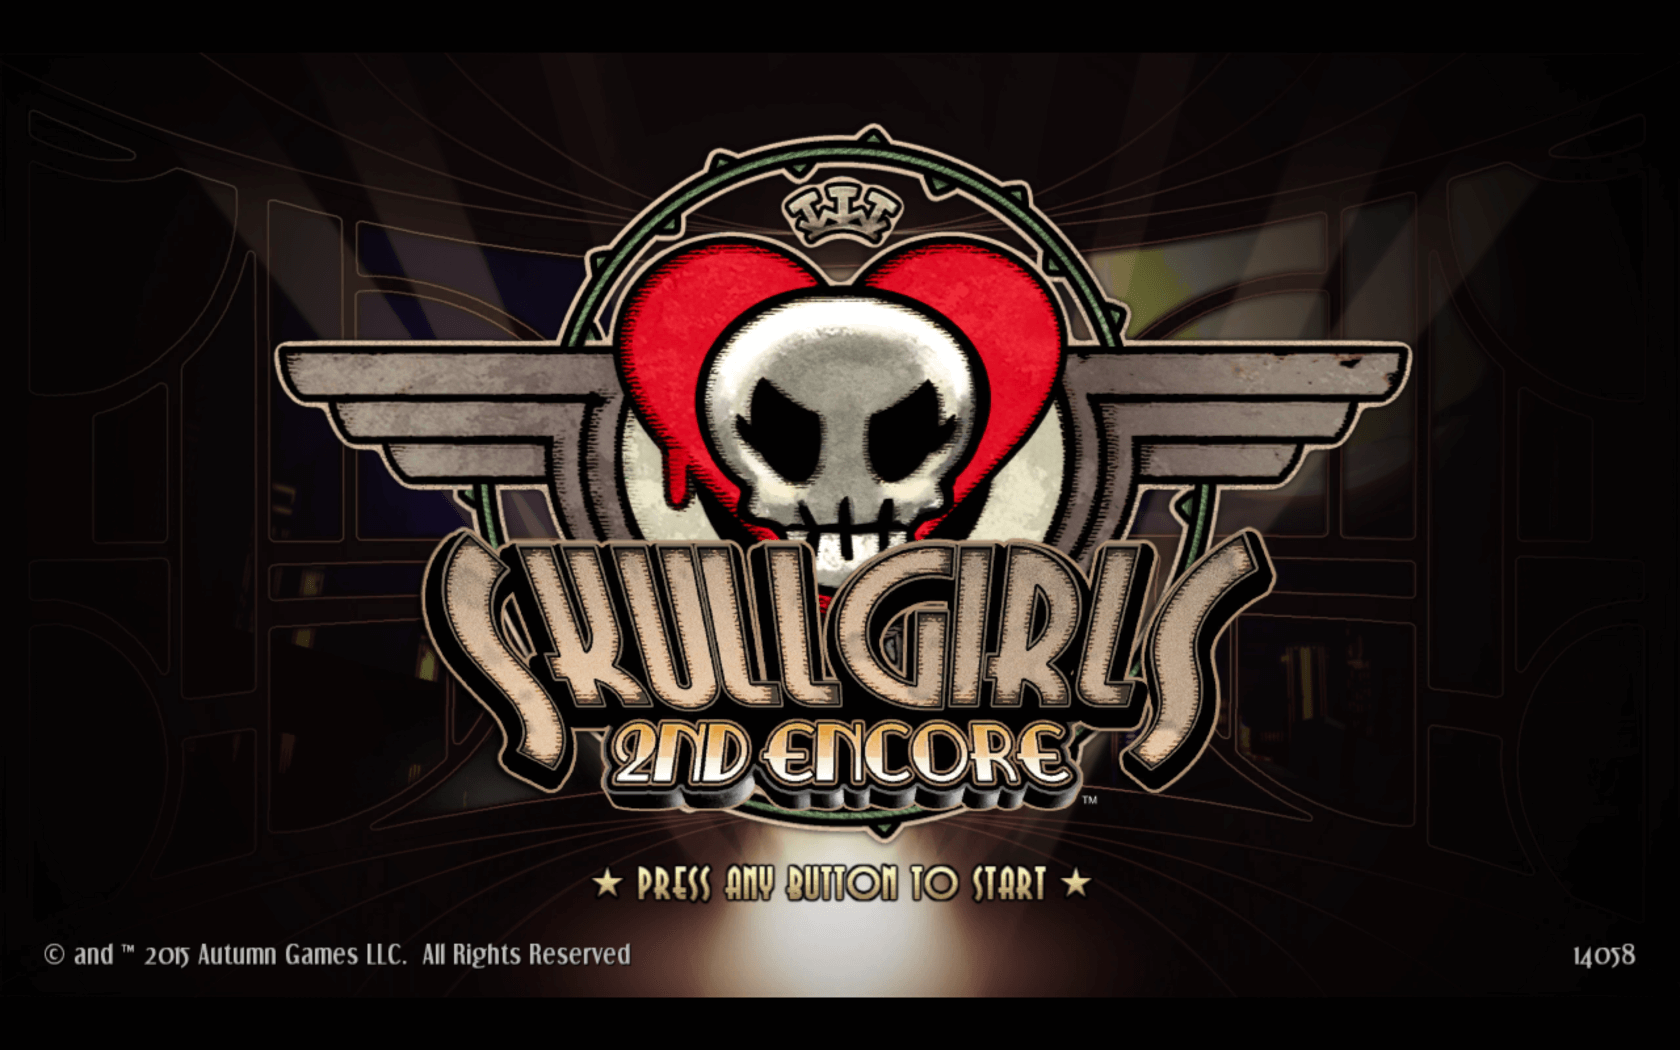 骷髅女孩：二度返场 for Mac v3.5.12 Skullgirls 2nd Encore 英文原生版 苹果电脑